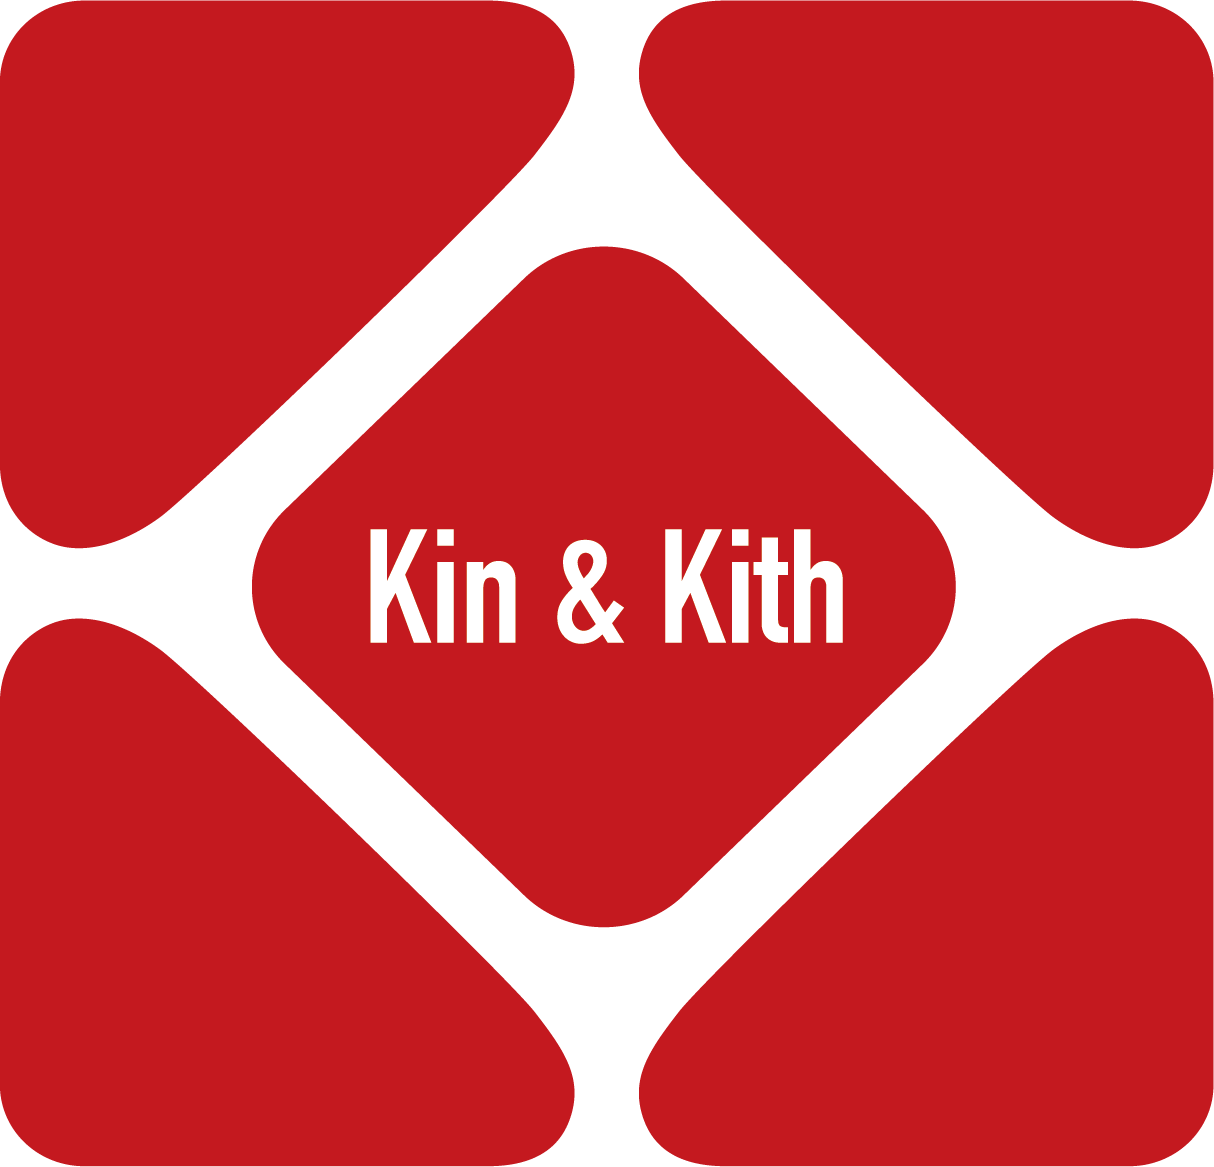 Kin & Kith